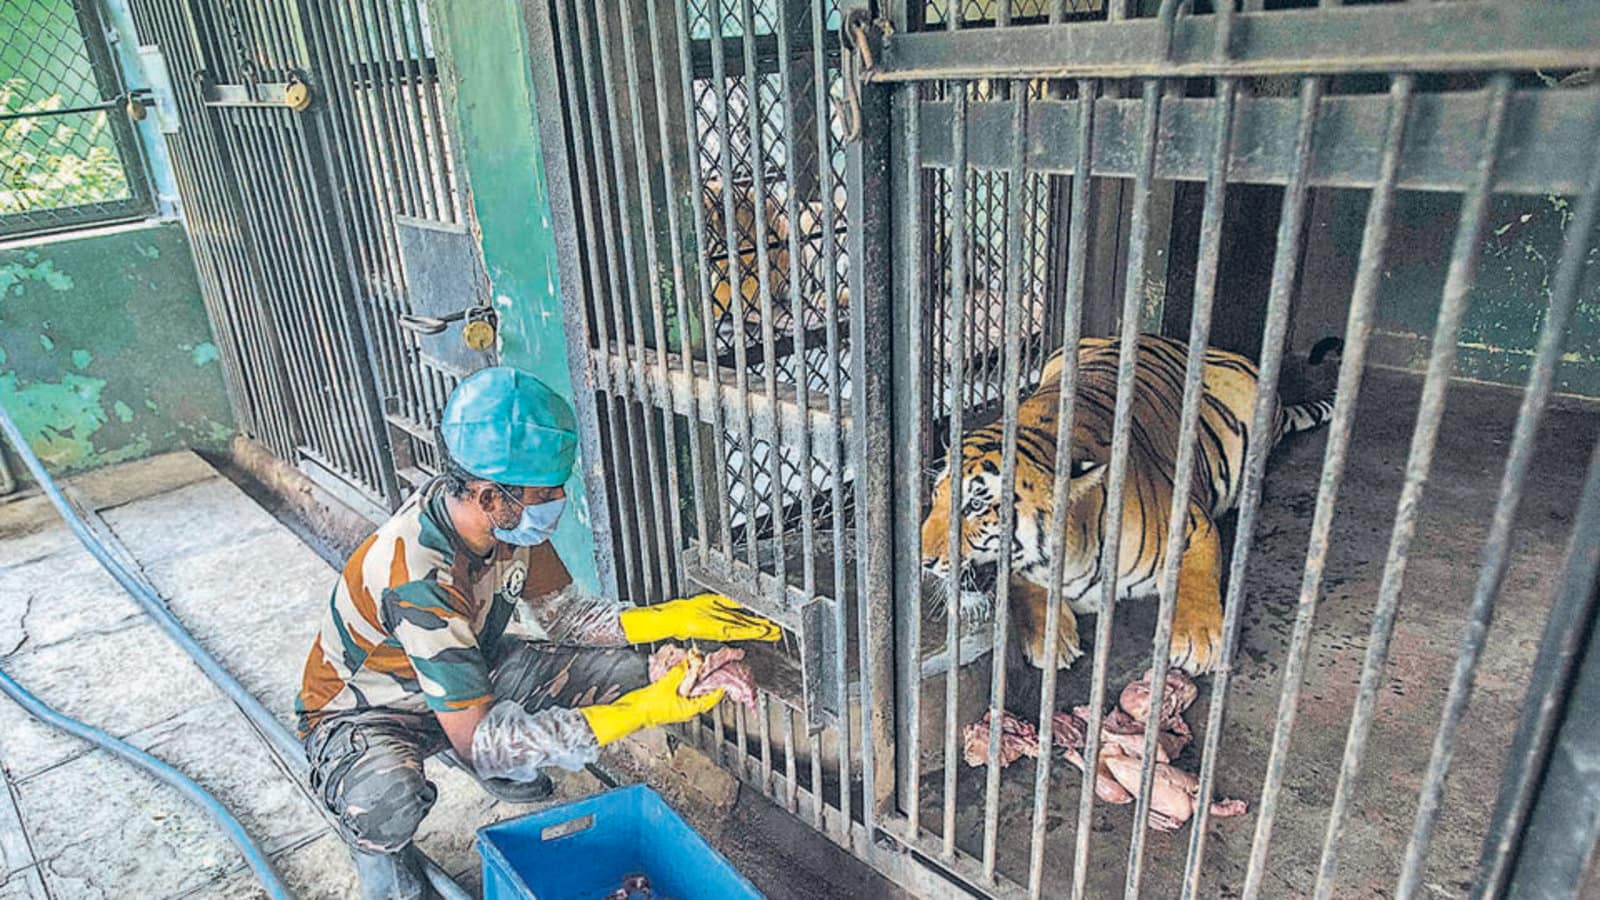 Katraj zoo under stricter Covid prevention cover - Hindustan Times